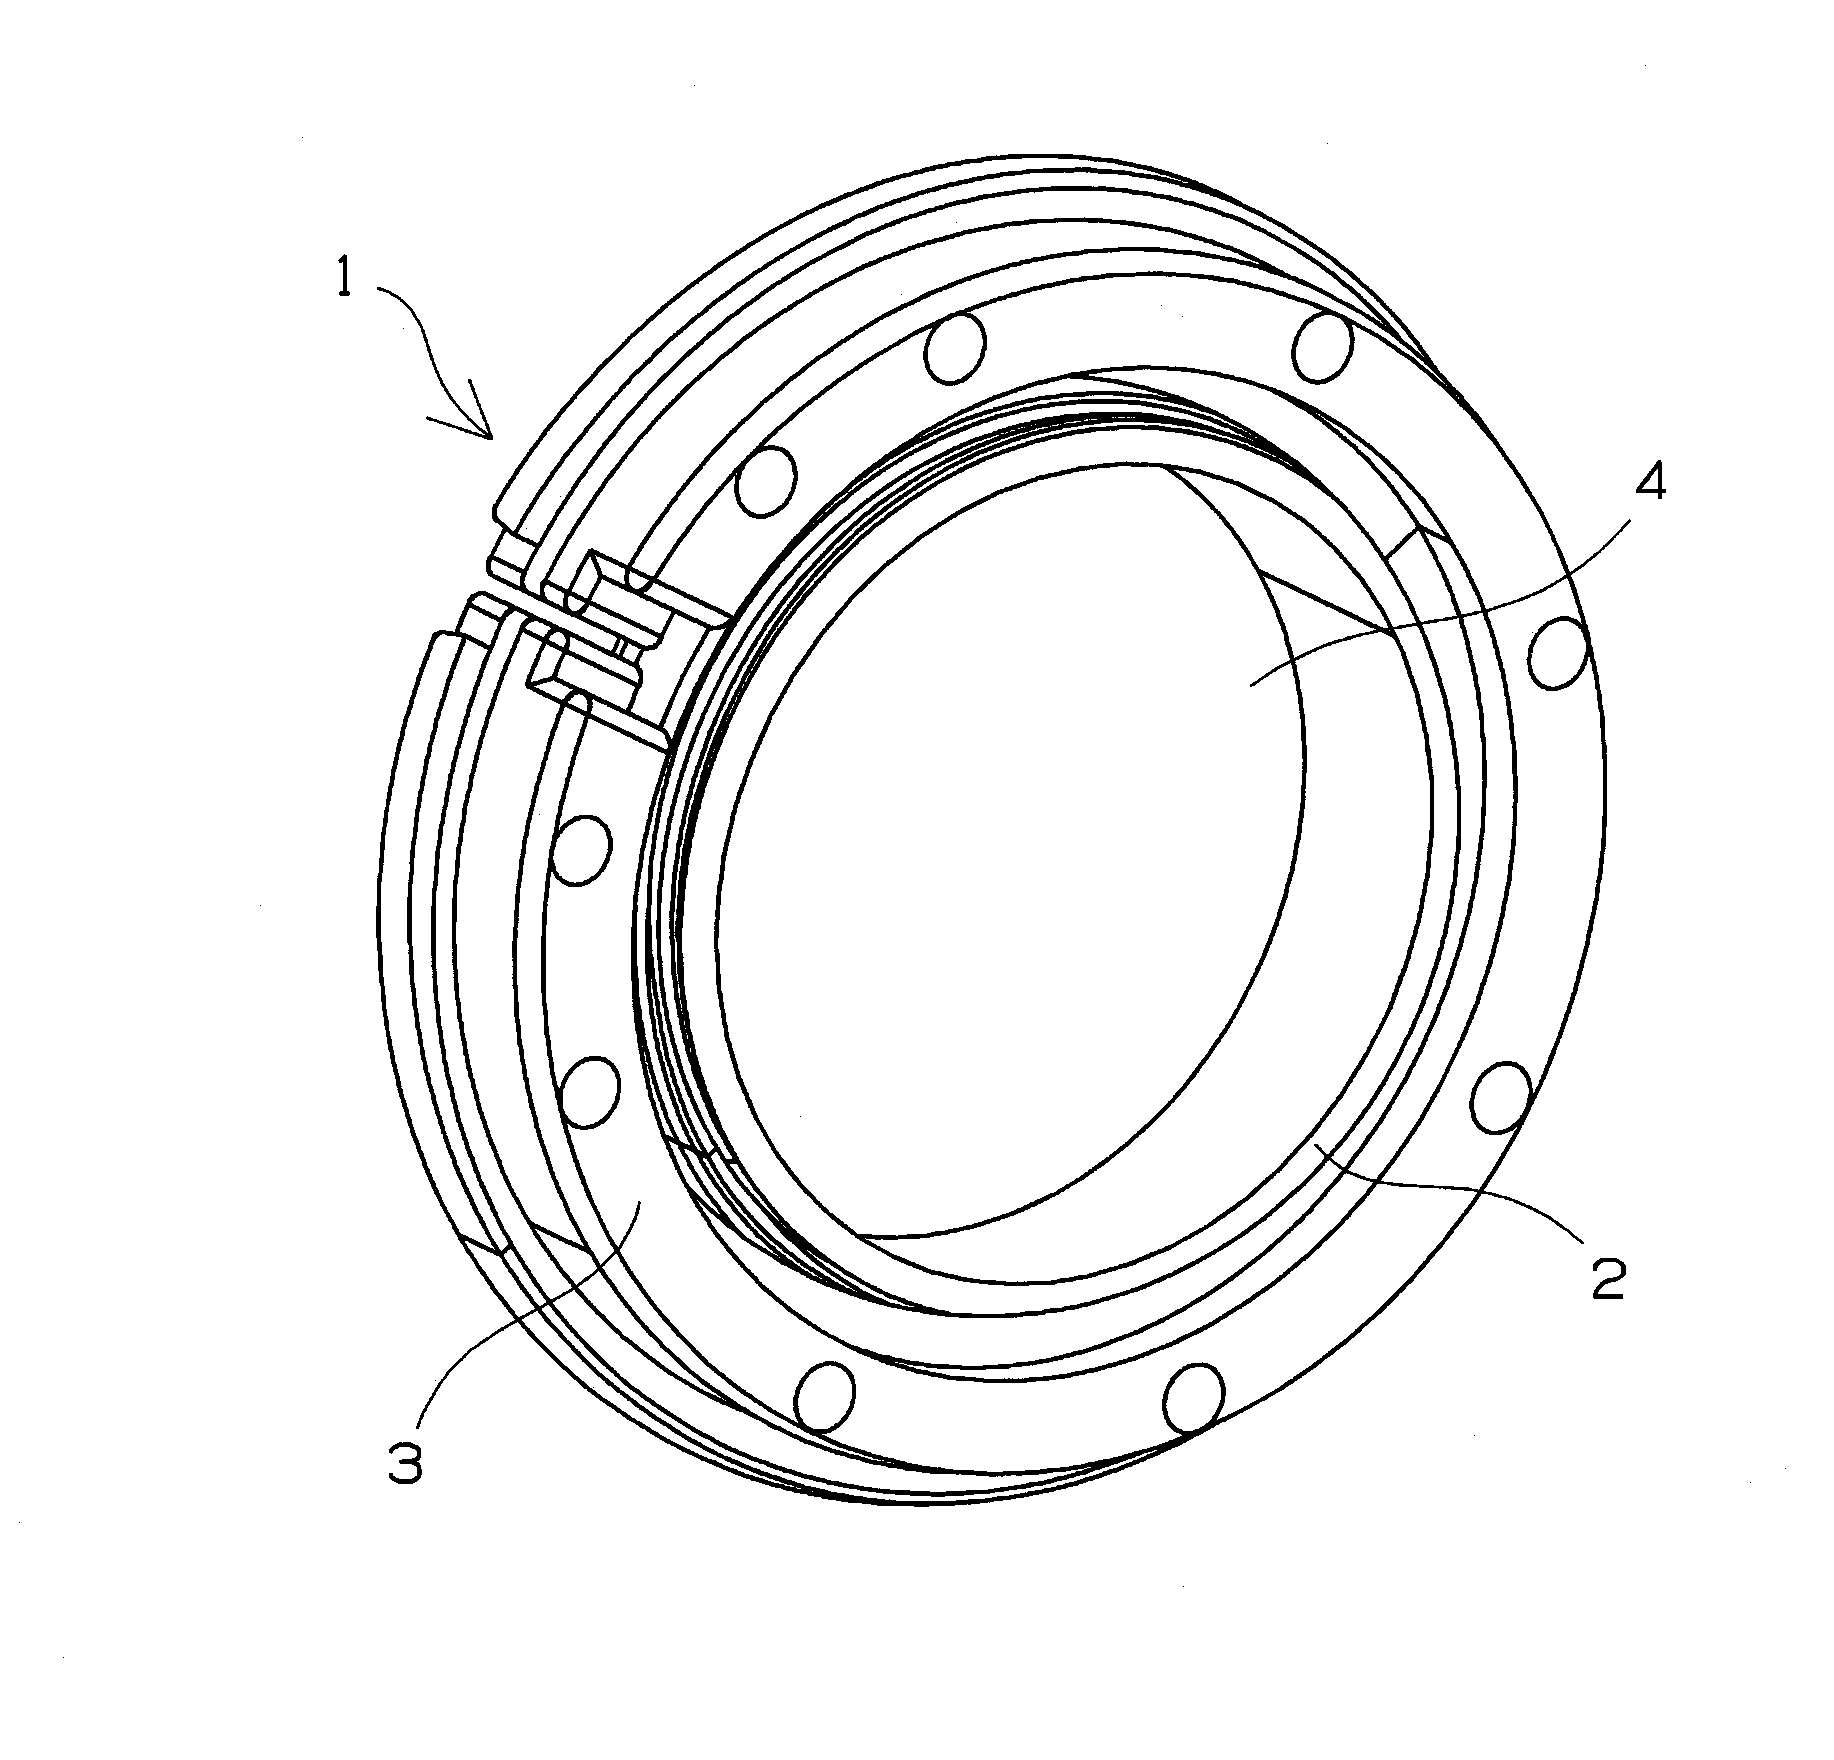 Sliding bearing and image forming apparatus